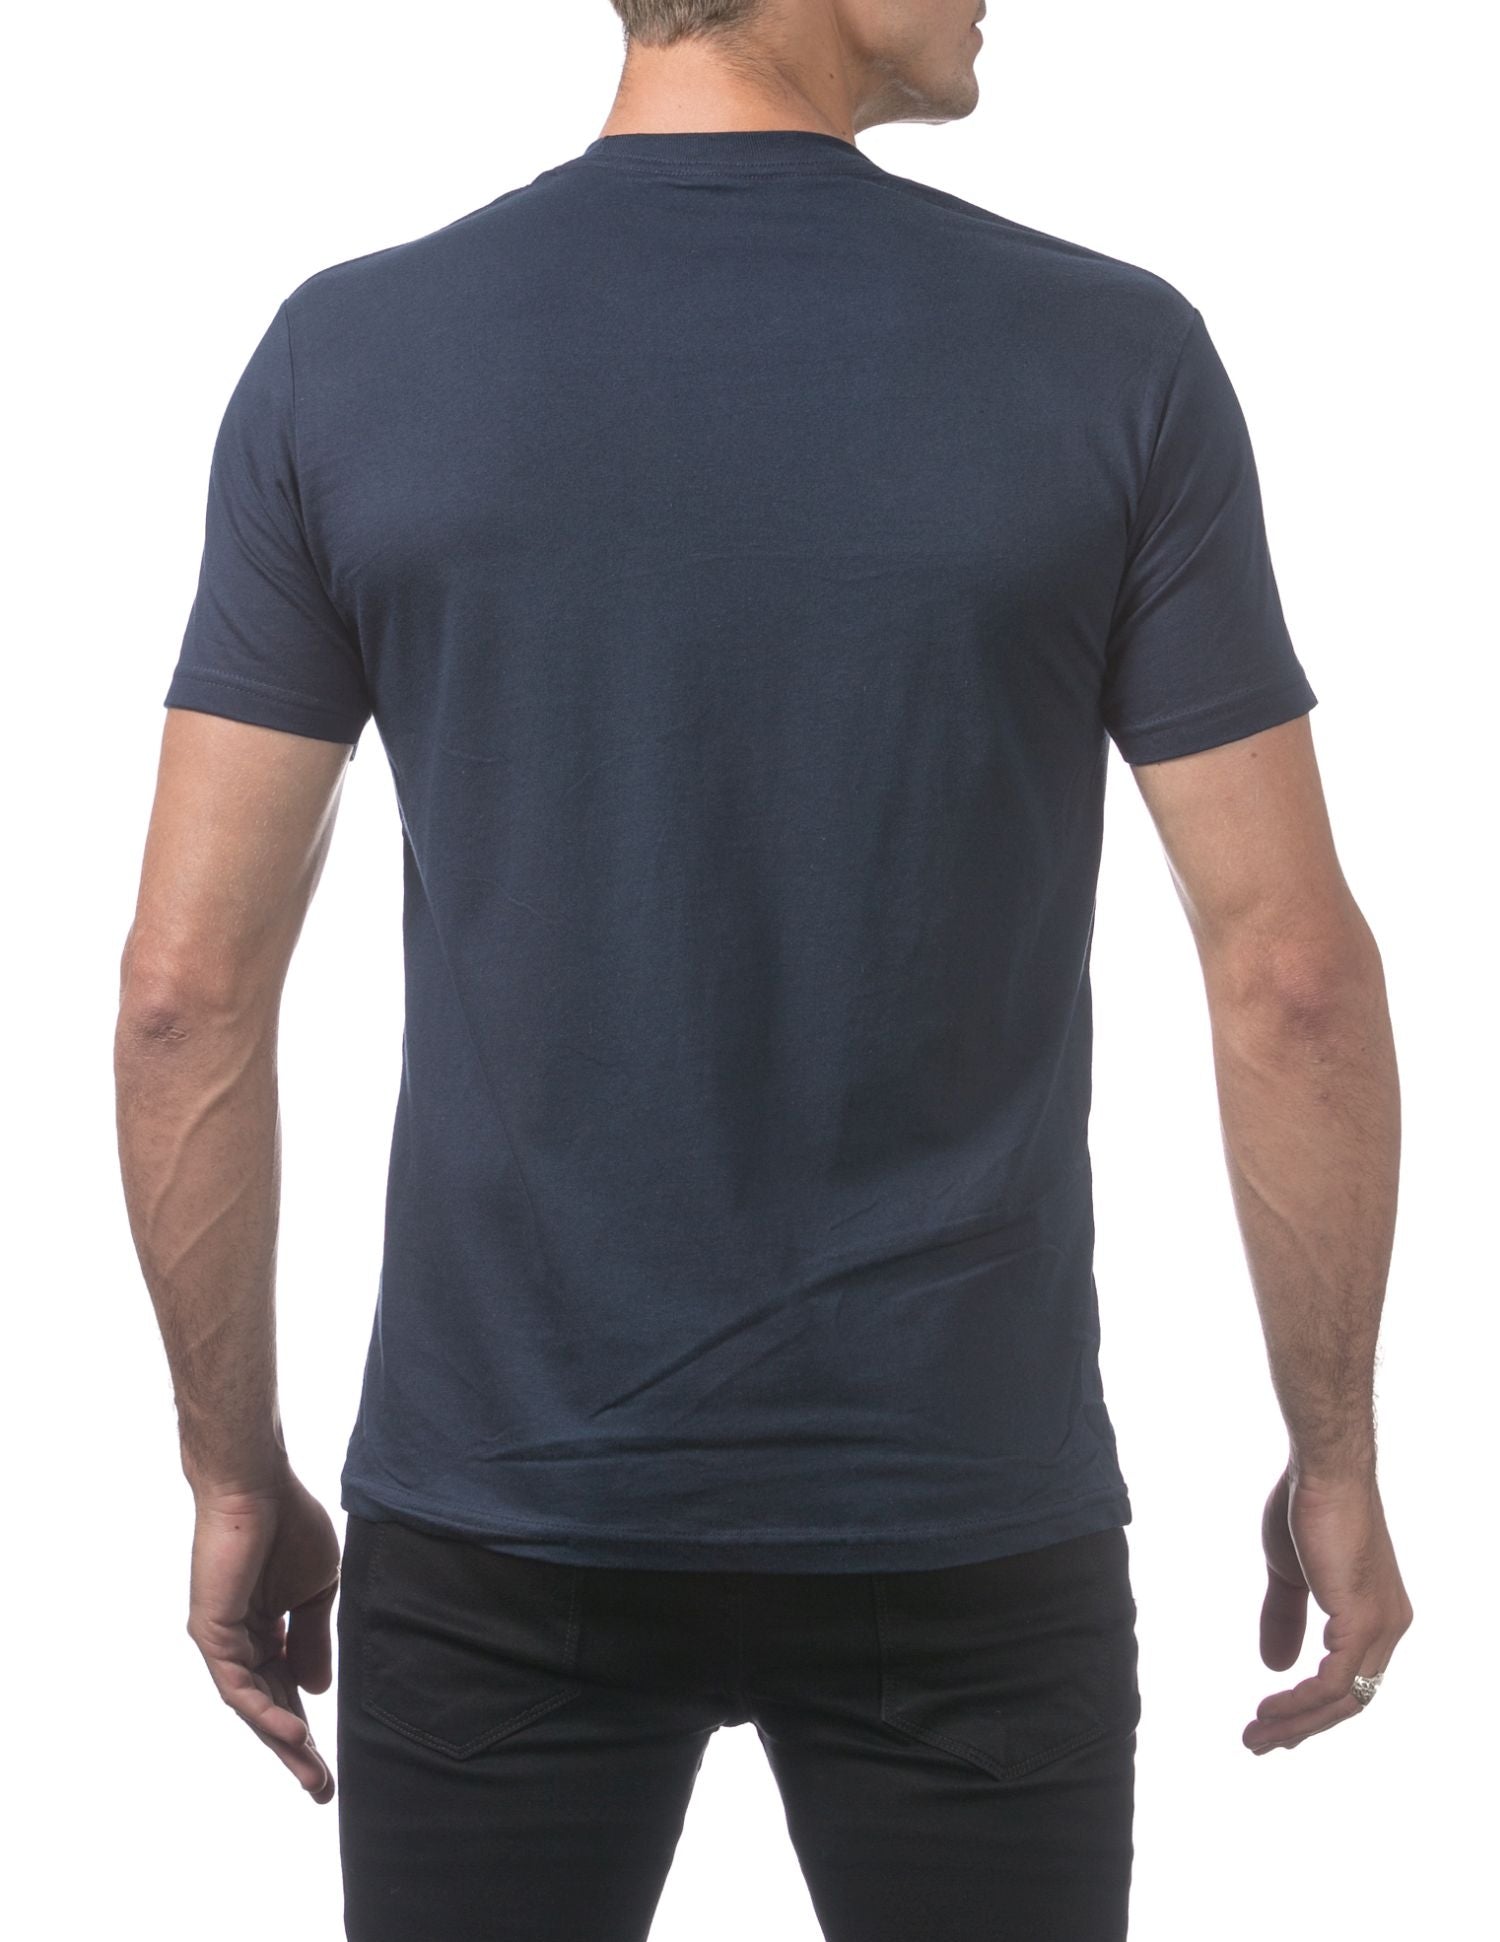 Pro Club Men's Comfort Cotton Short Sleeve T-Shirt - Navy Blue - Large - Pro-Distributing